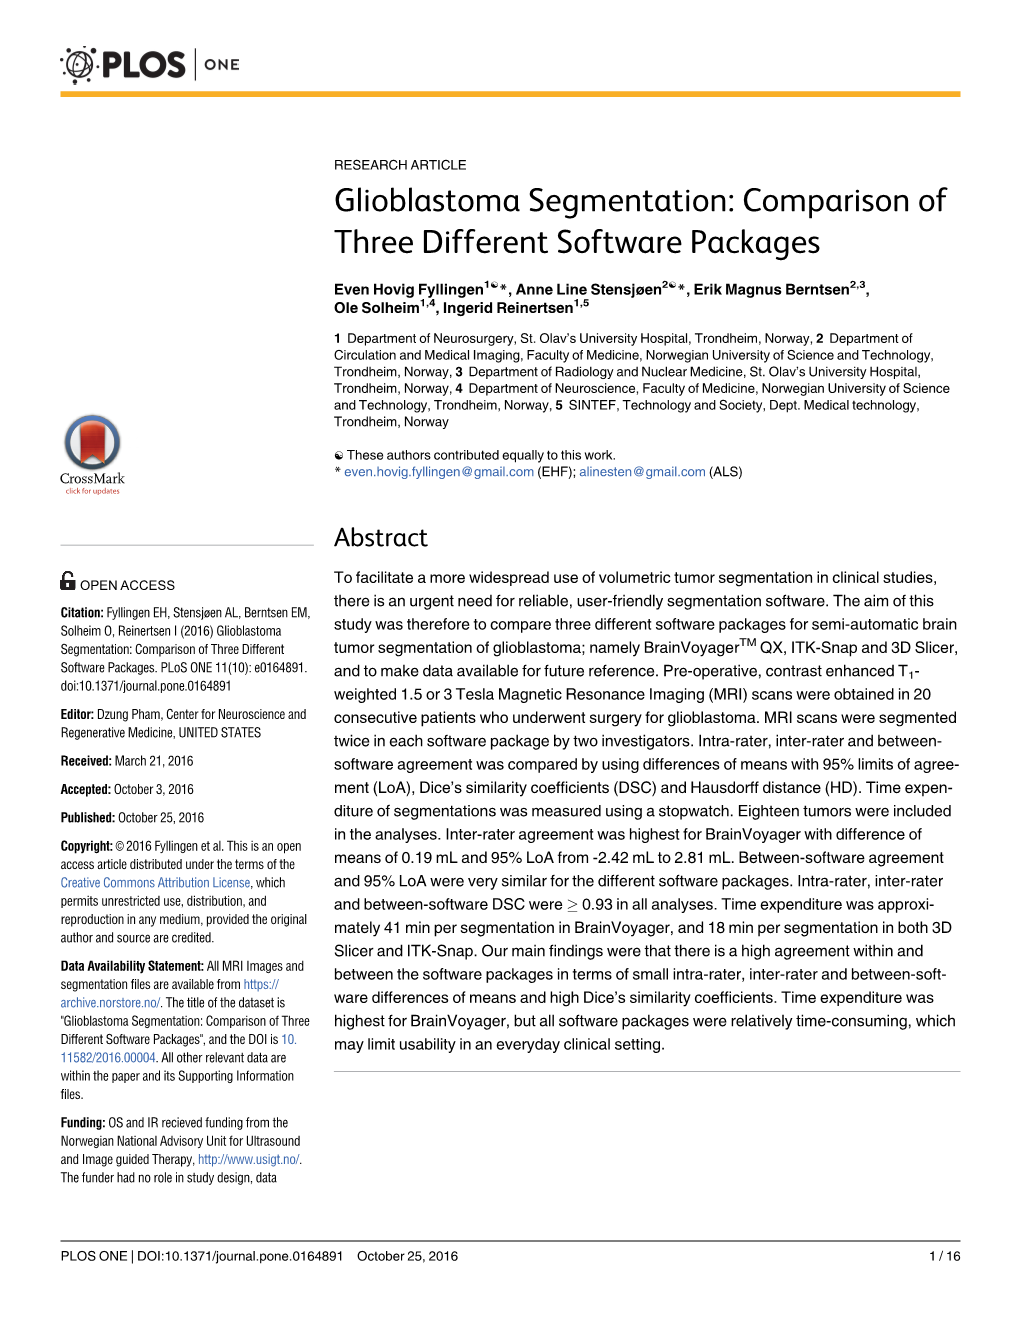 Glioblastoma Segmentation: Comparison of Three Different Software Packages